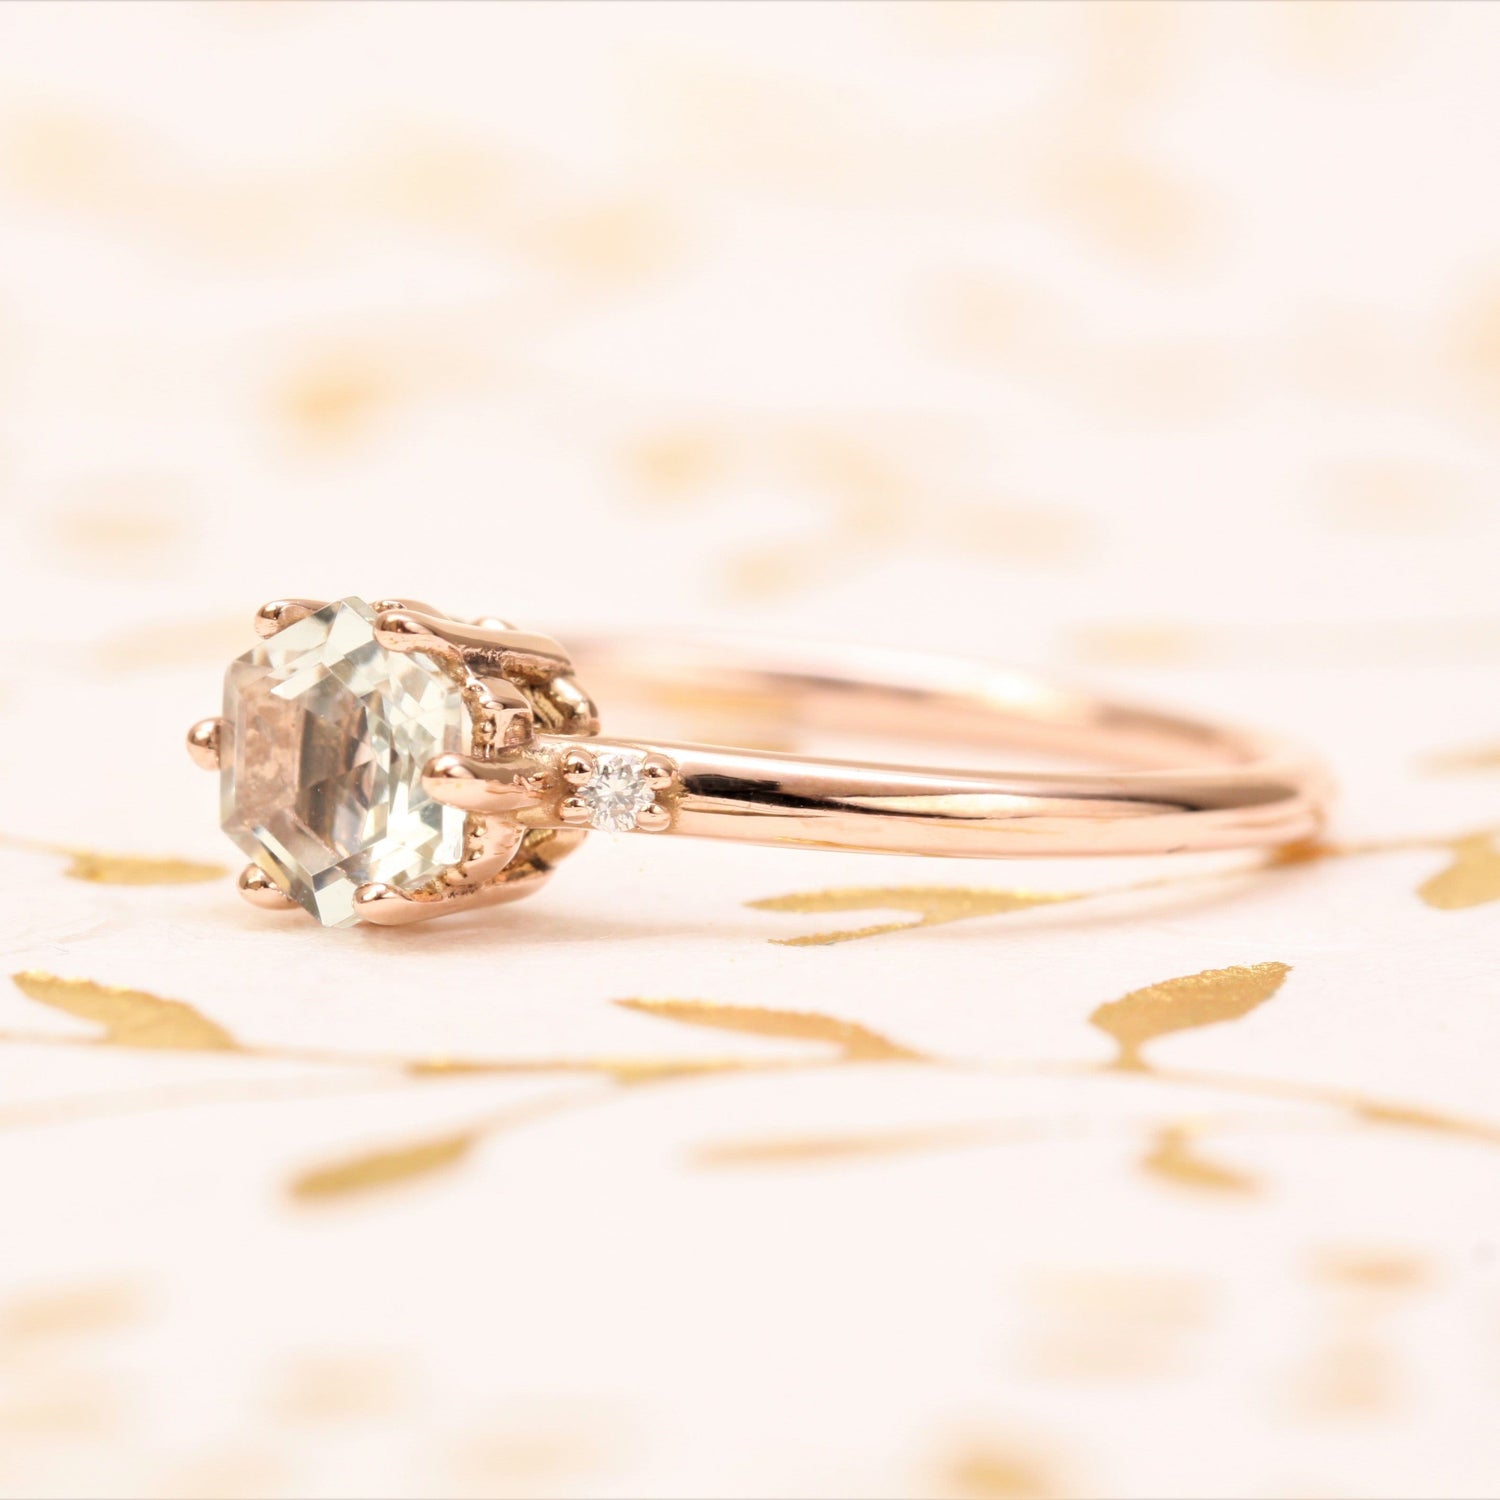 Green amethyst and diamond engagement ring - Vinny & Charles